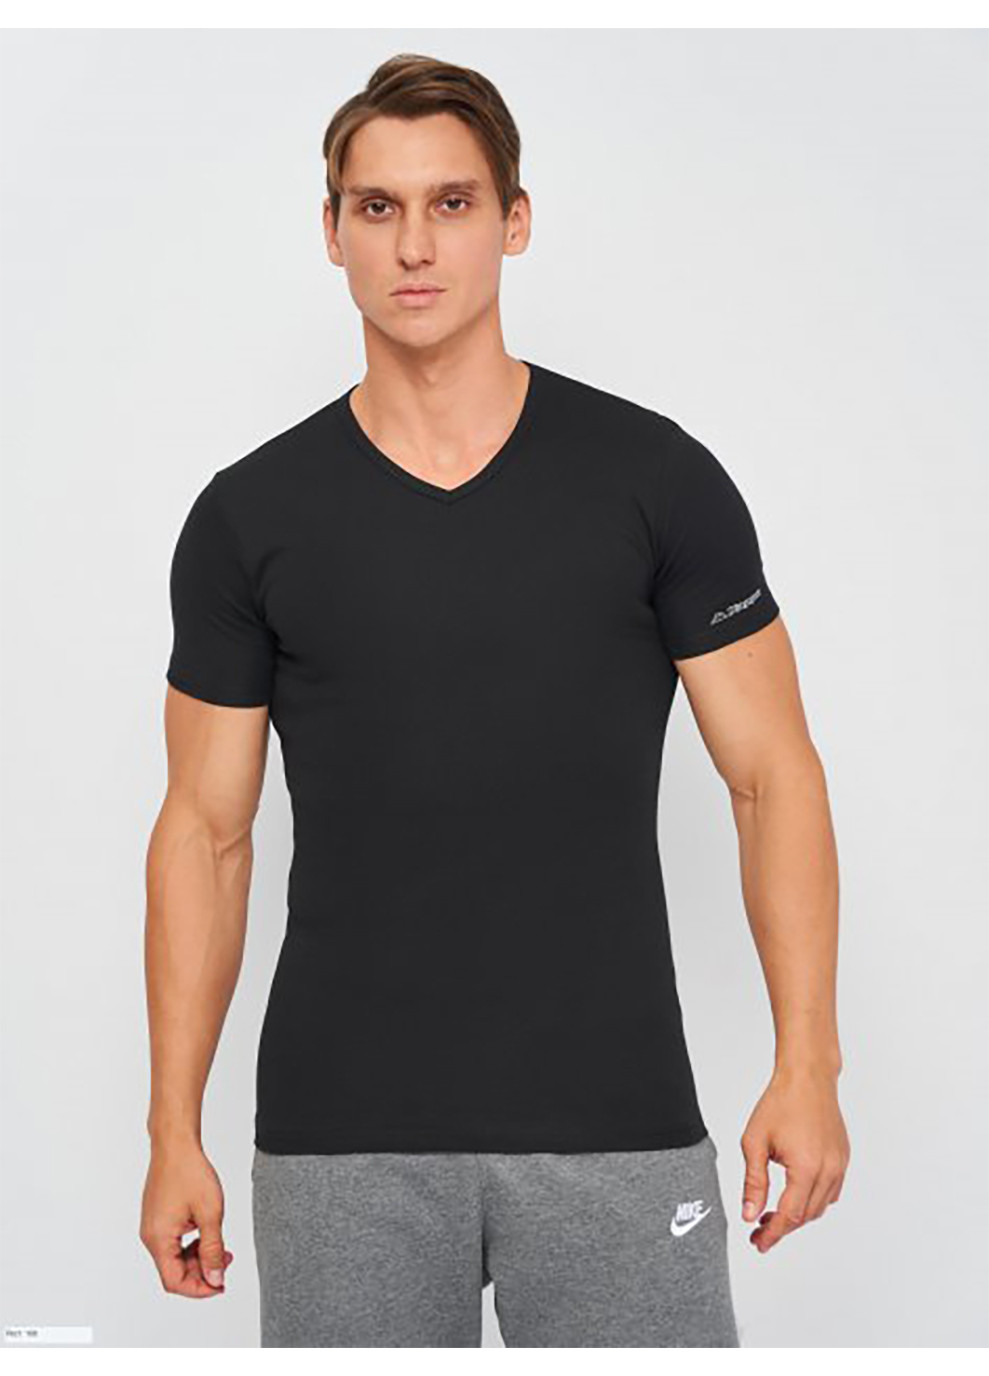 Черная футболка t-shirt mezza manica scollo v черный муж m k1311 nero m Kappa